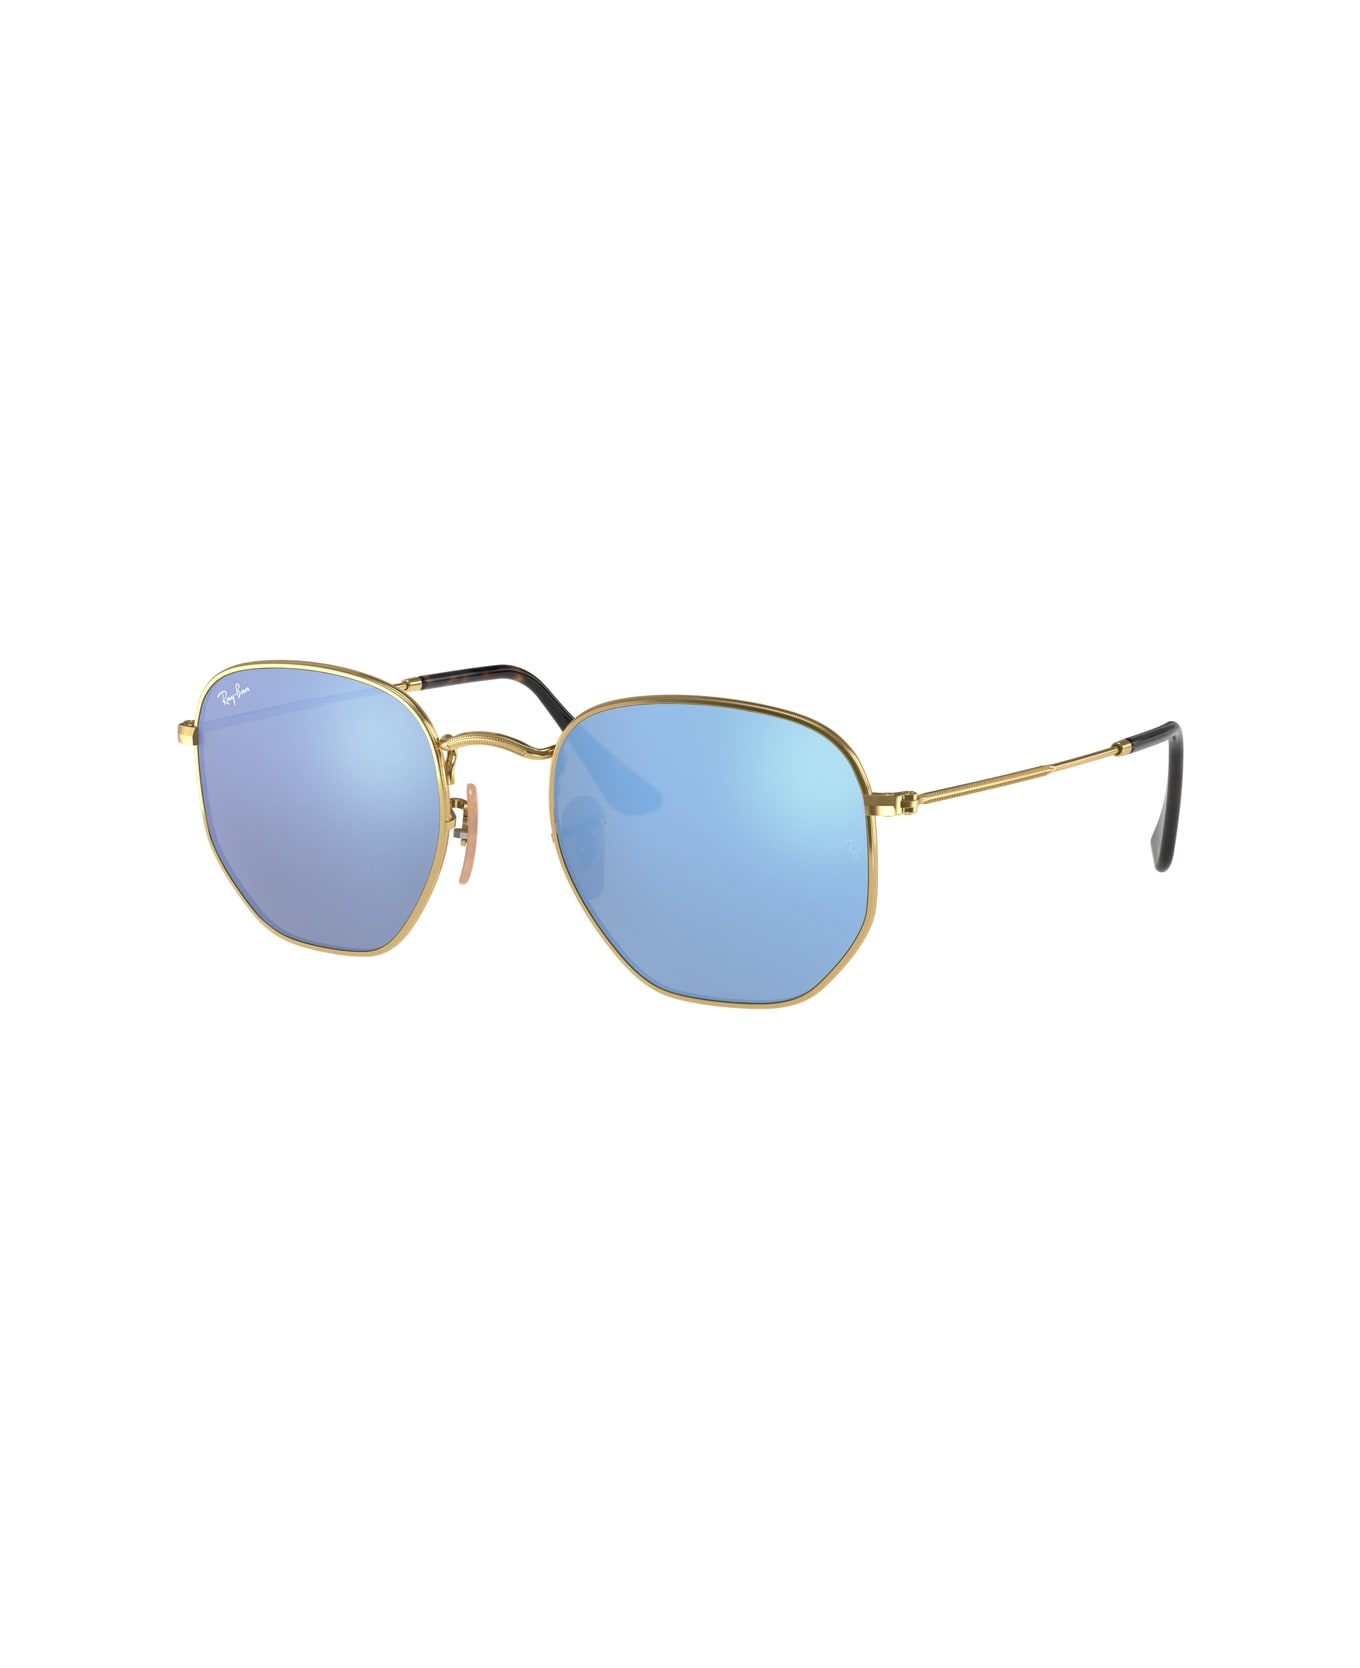 Ray-Ban Rb3548 001/9o Sunglasses - Oro サングラス